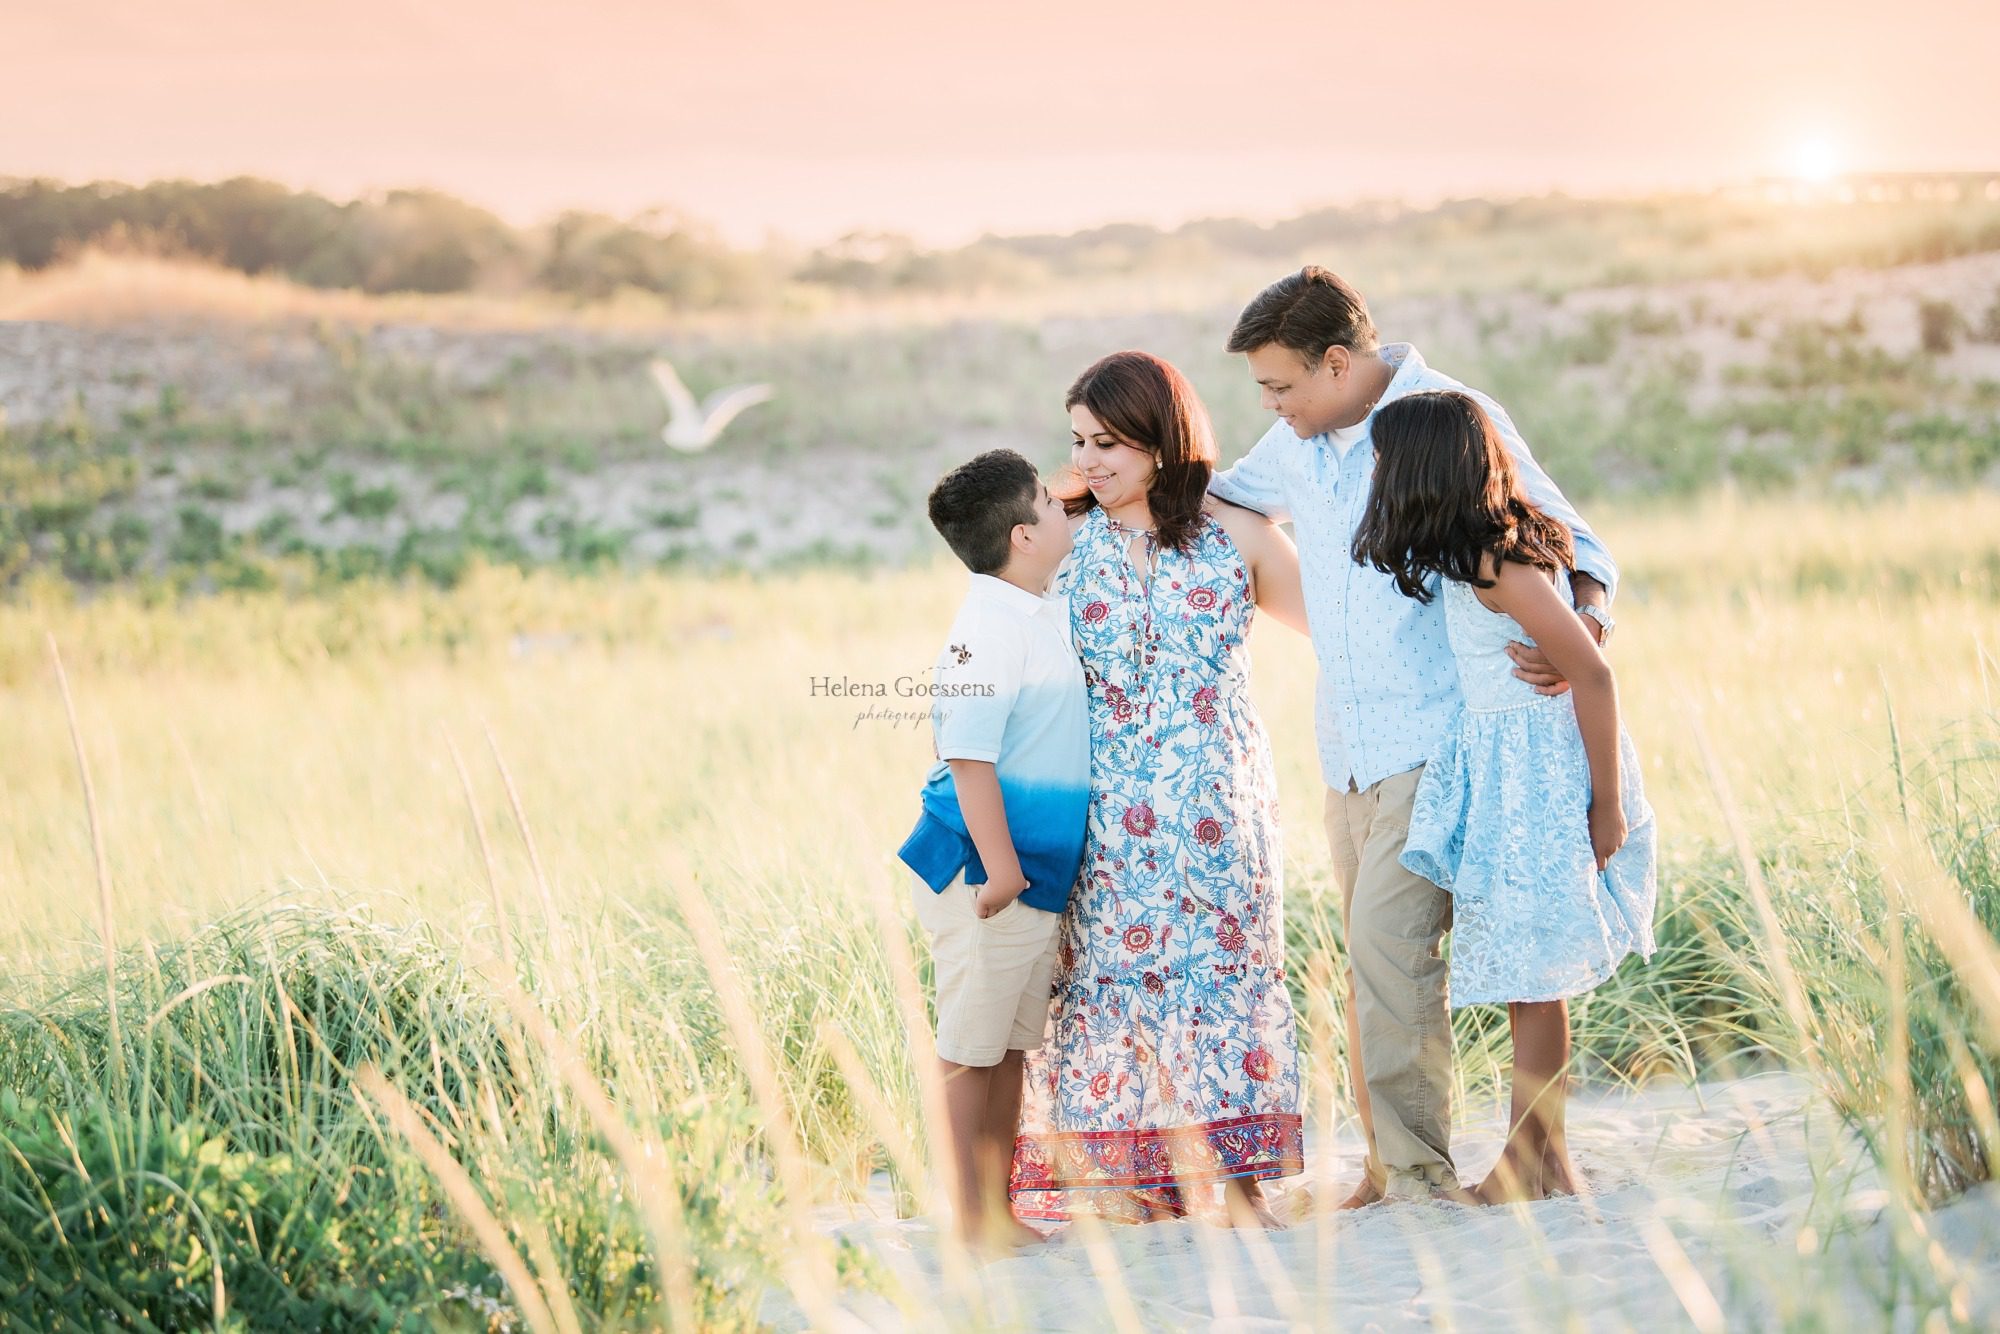 Creating Memories - A beach family session | Boston Family Photographer